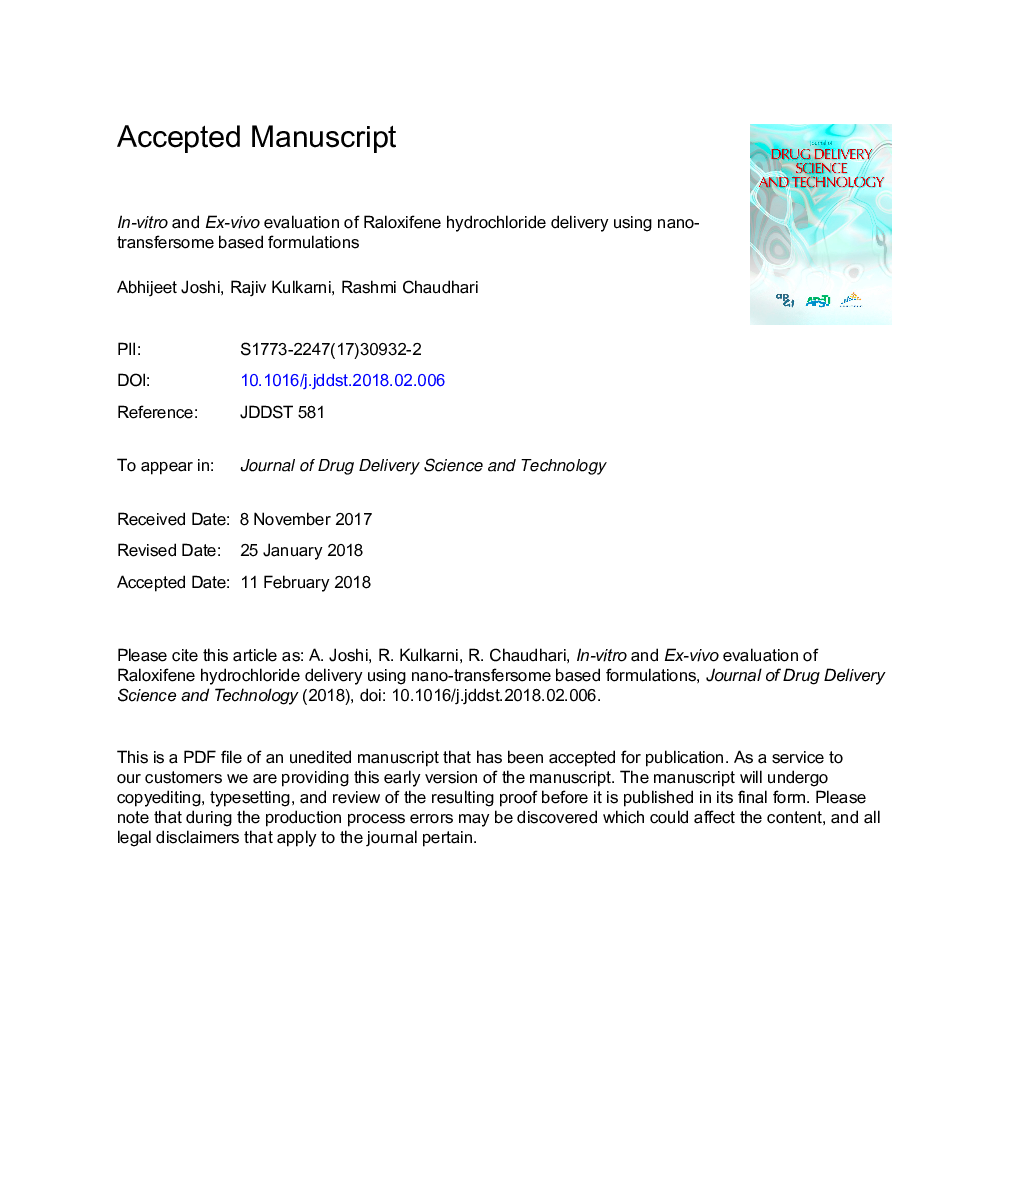 In-vitro and Ex-vivo evaluation of Raloxifene hydrochloride delivery using nano-transfersome based formulations